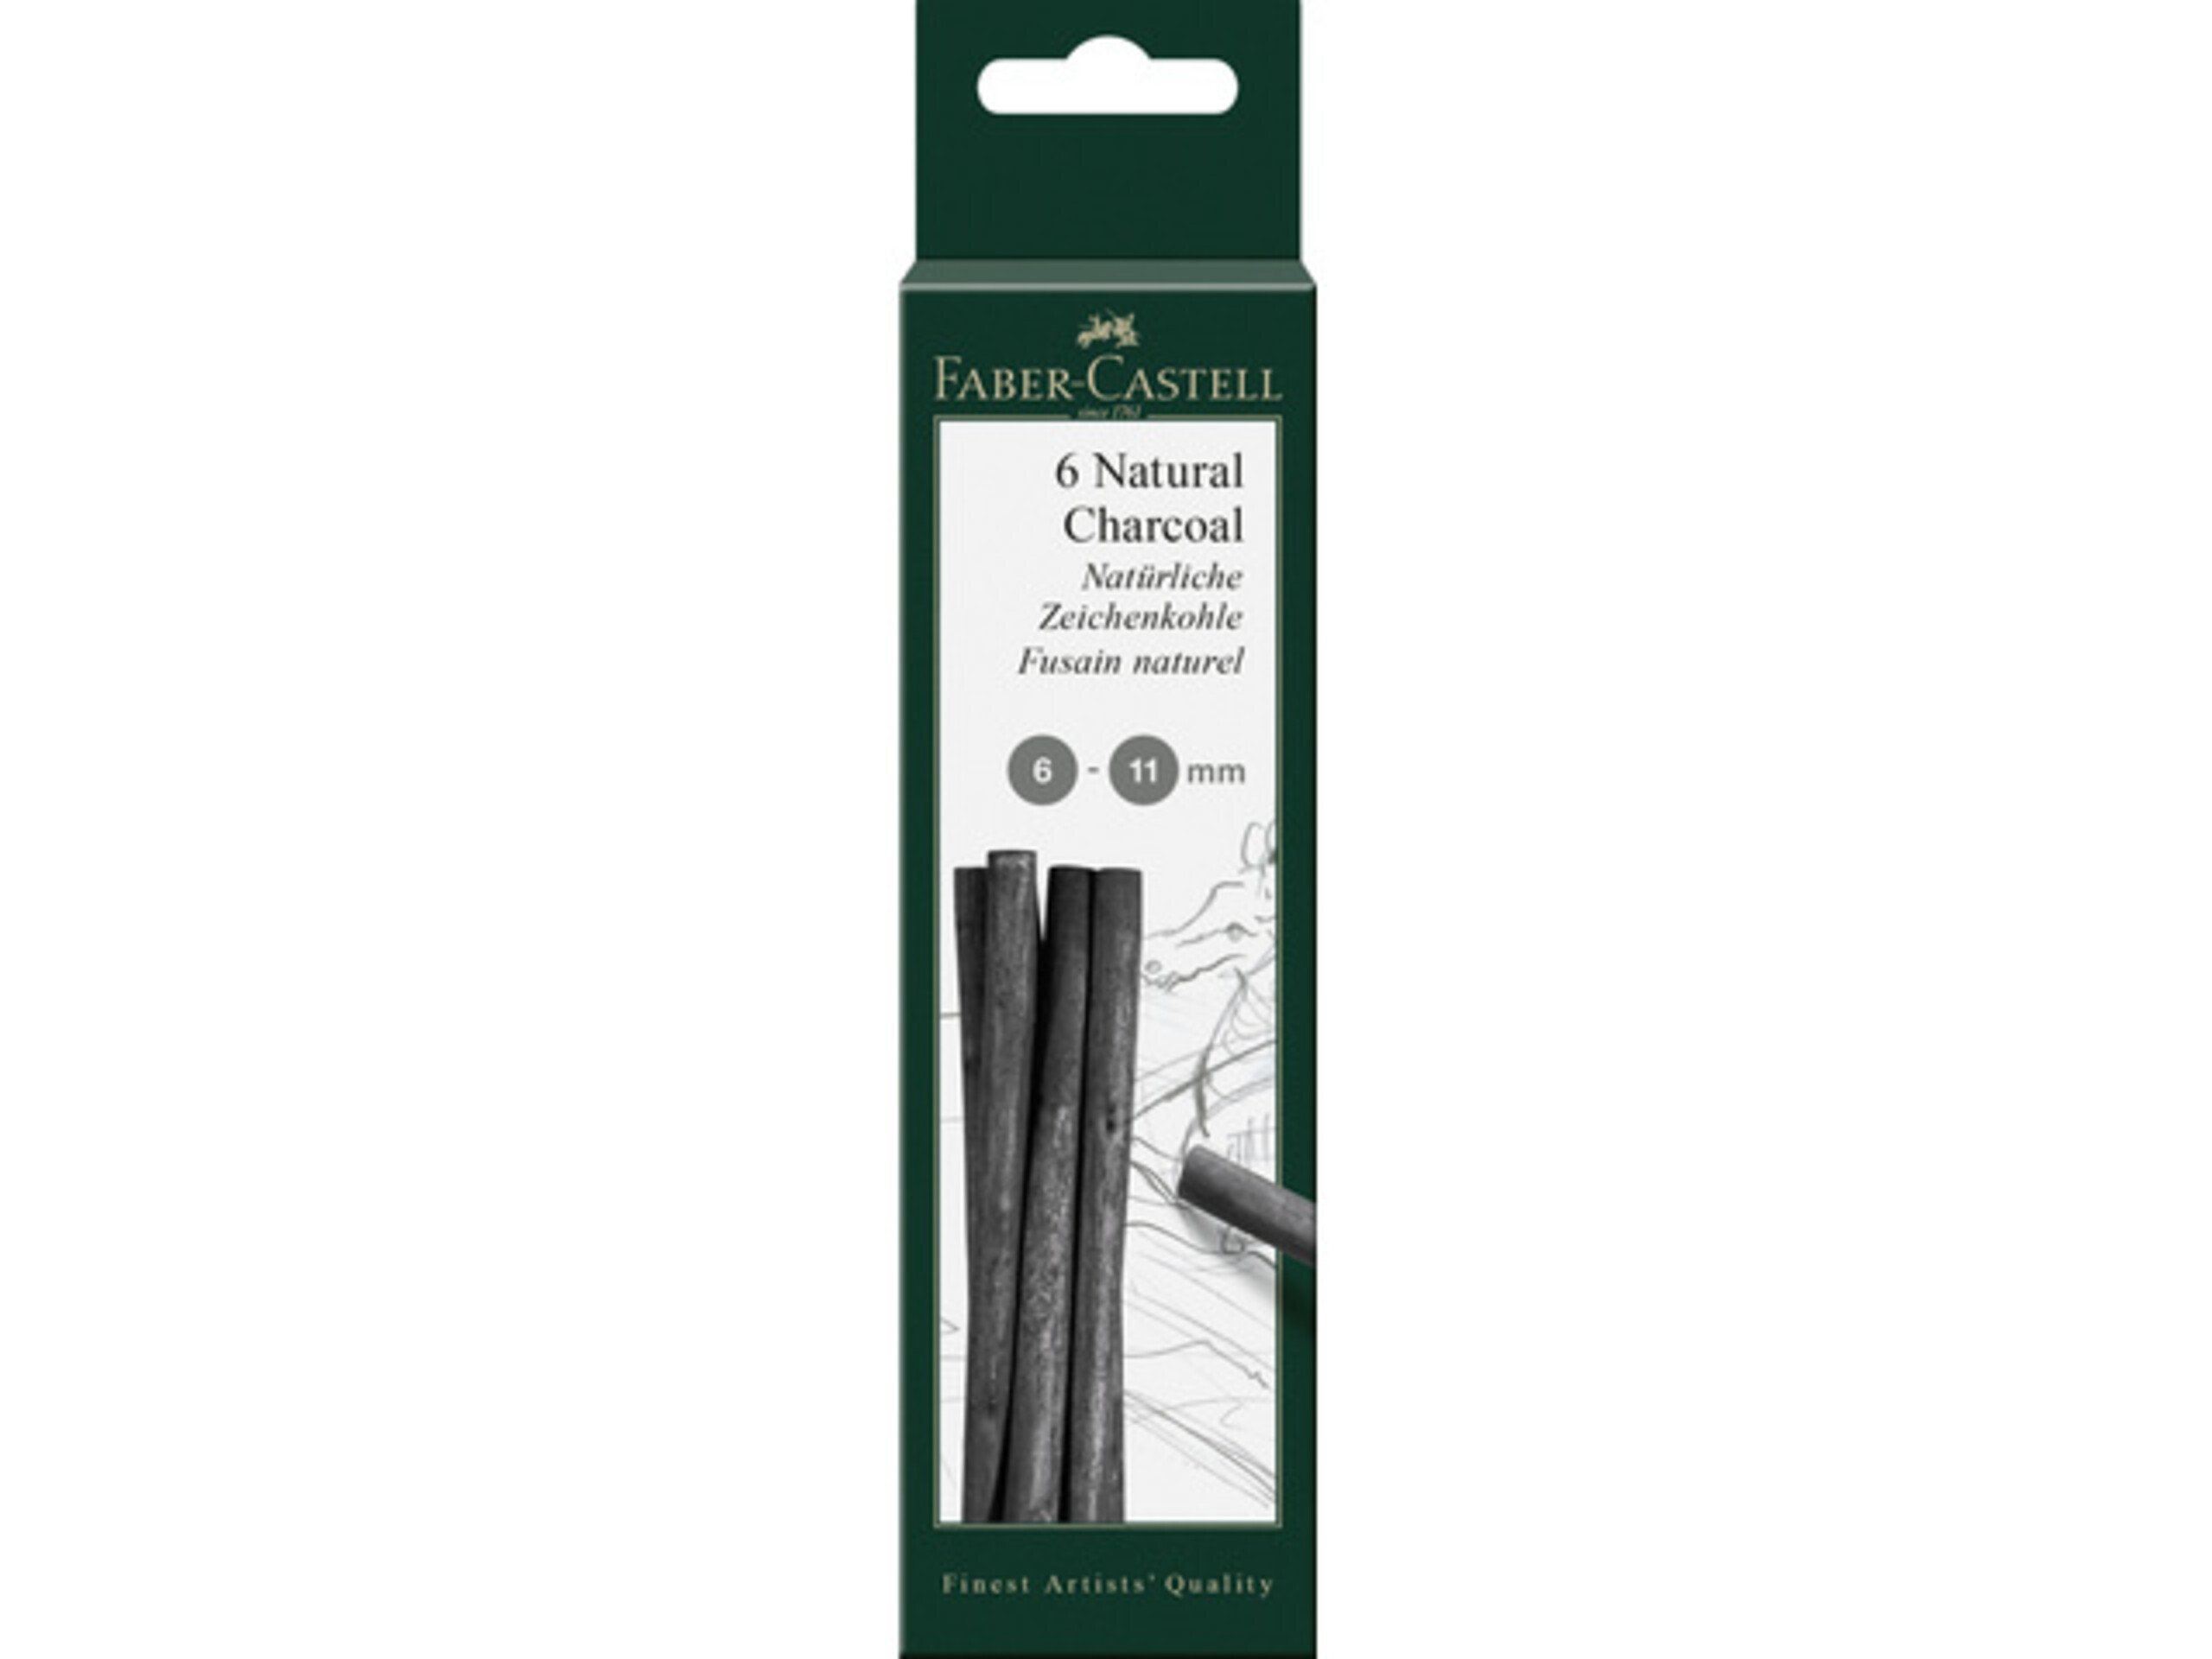 Faber Castell Natural Charcoal Sticks 6-11mm 6/Pkg